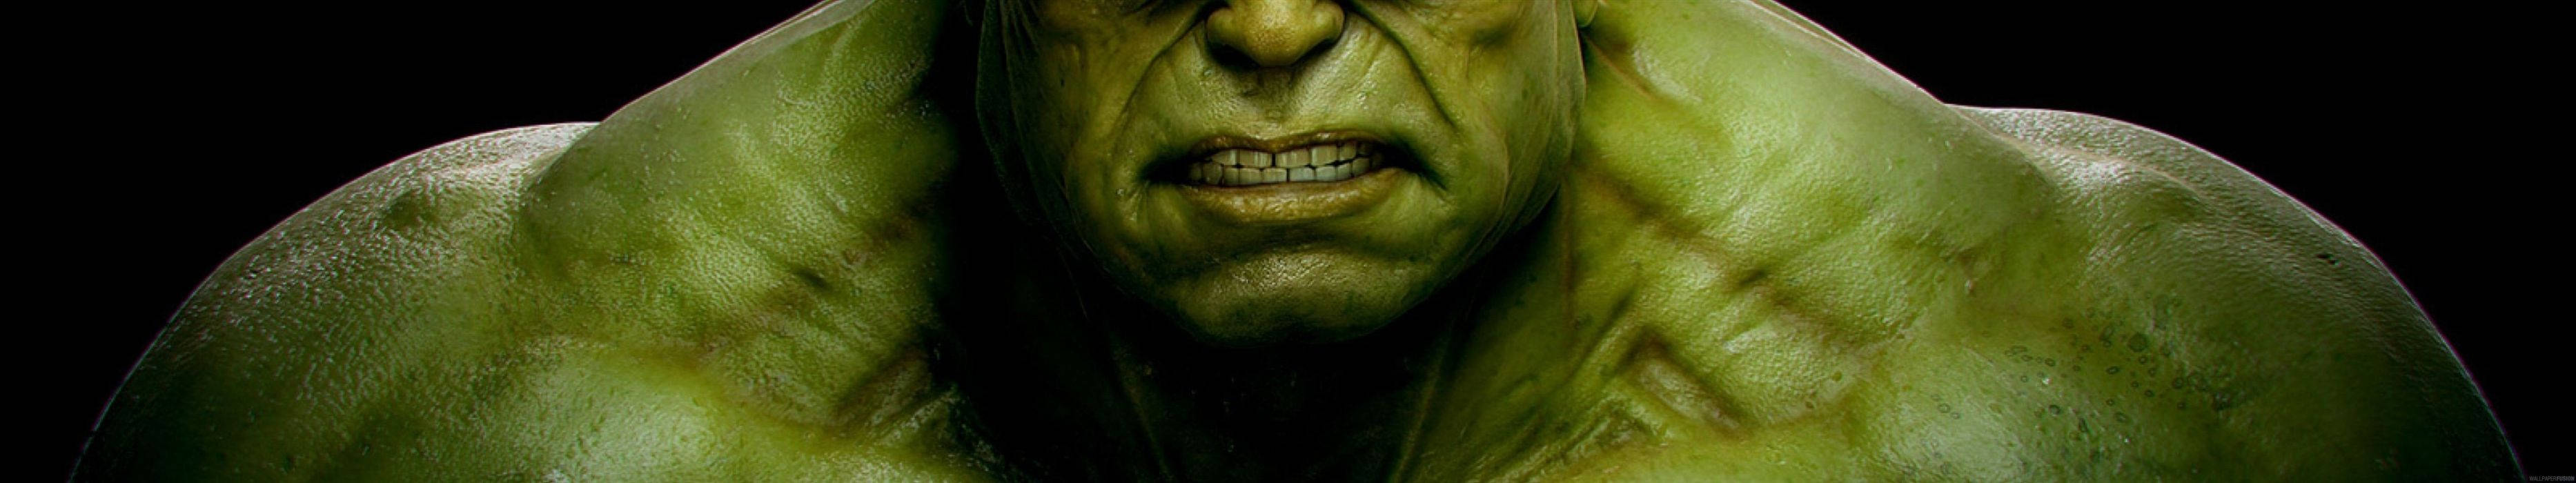 Enter Hulk's World with Triple Monitor Wallpaper